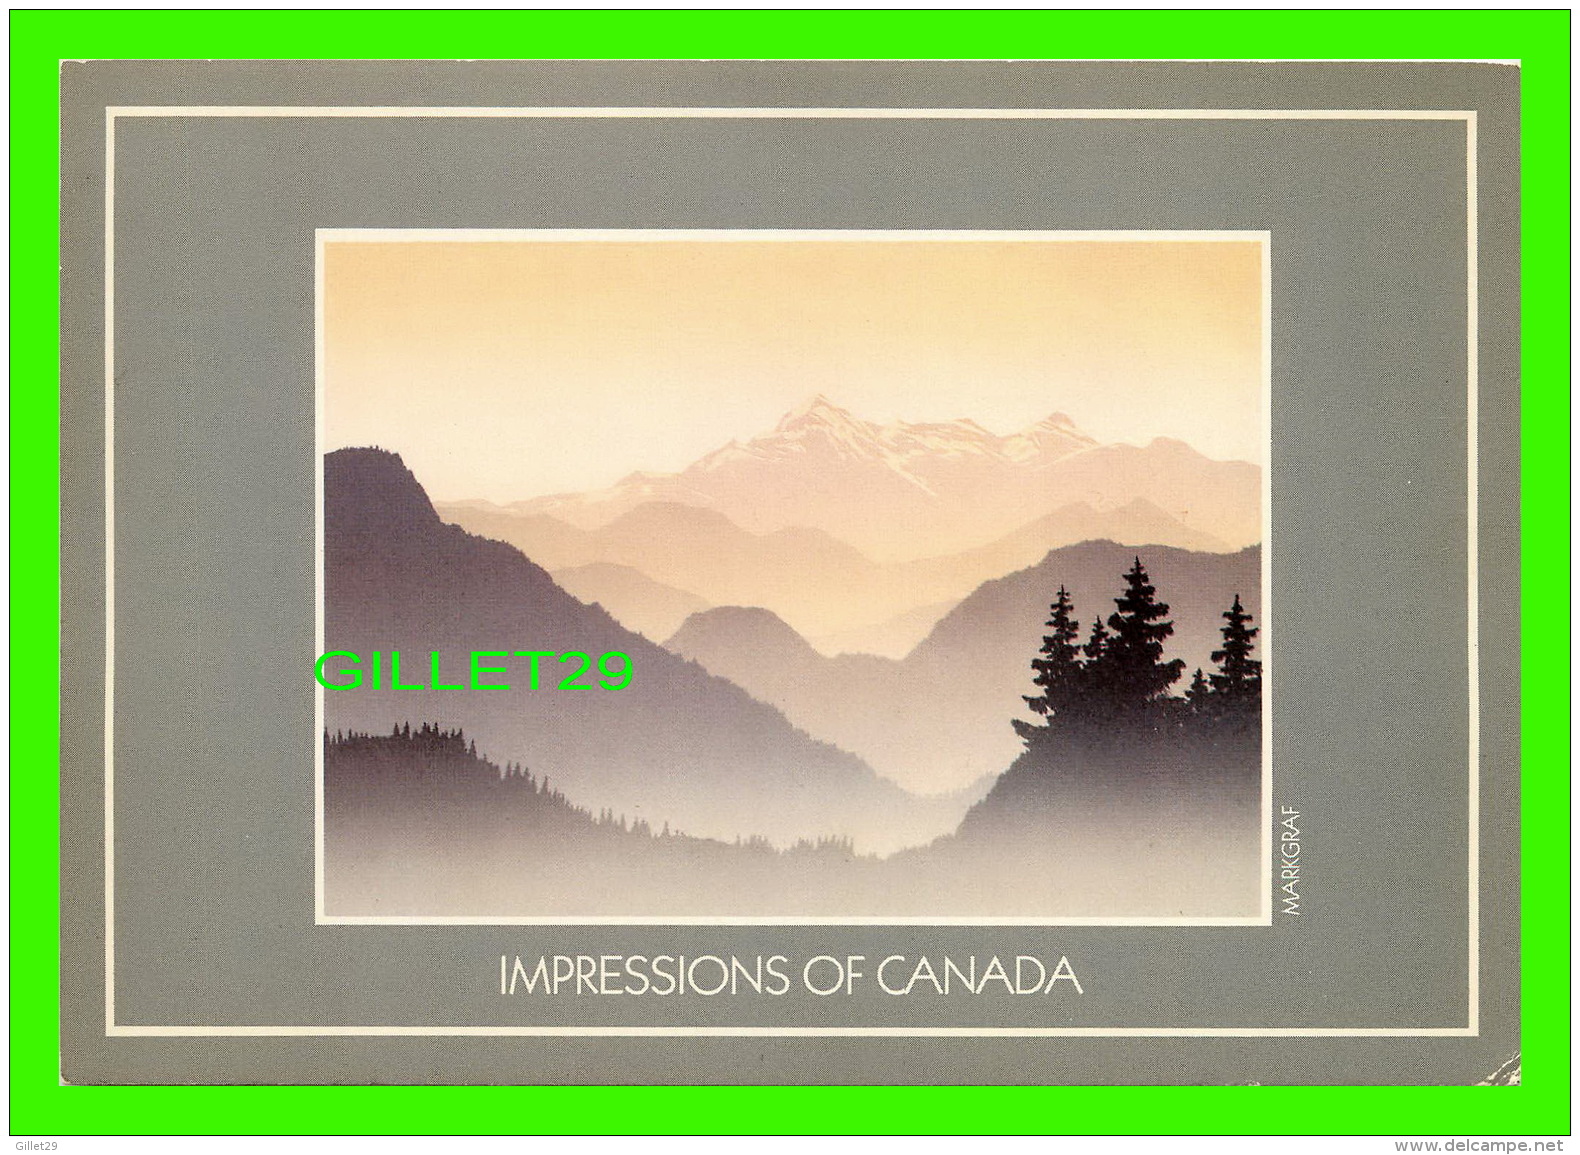 IMPRESSIONS OF CANADA - COASTAL RANGE BY PETER &amp; TRAUDL MARKGRAF No 9634 - DIMENSION 12 X 17 Cm - - Cartes Modernes